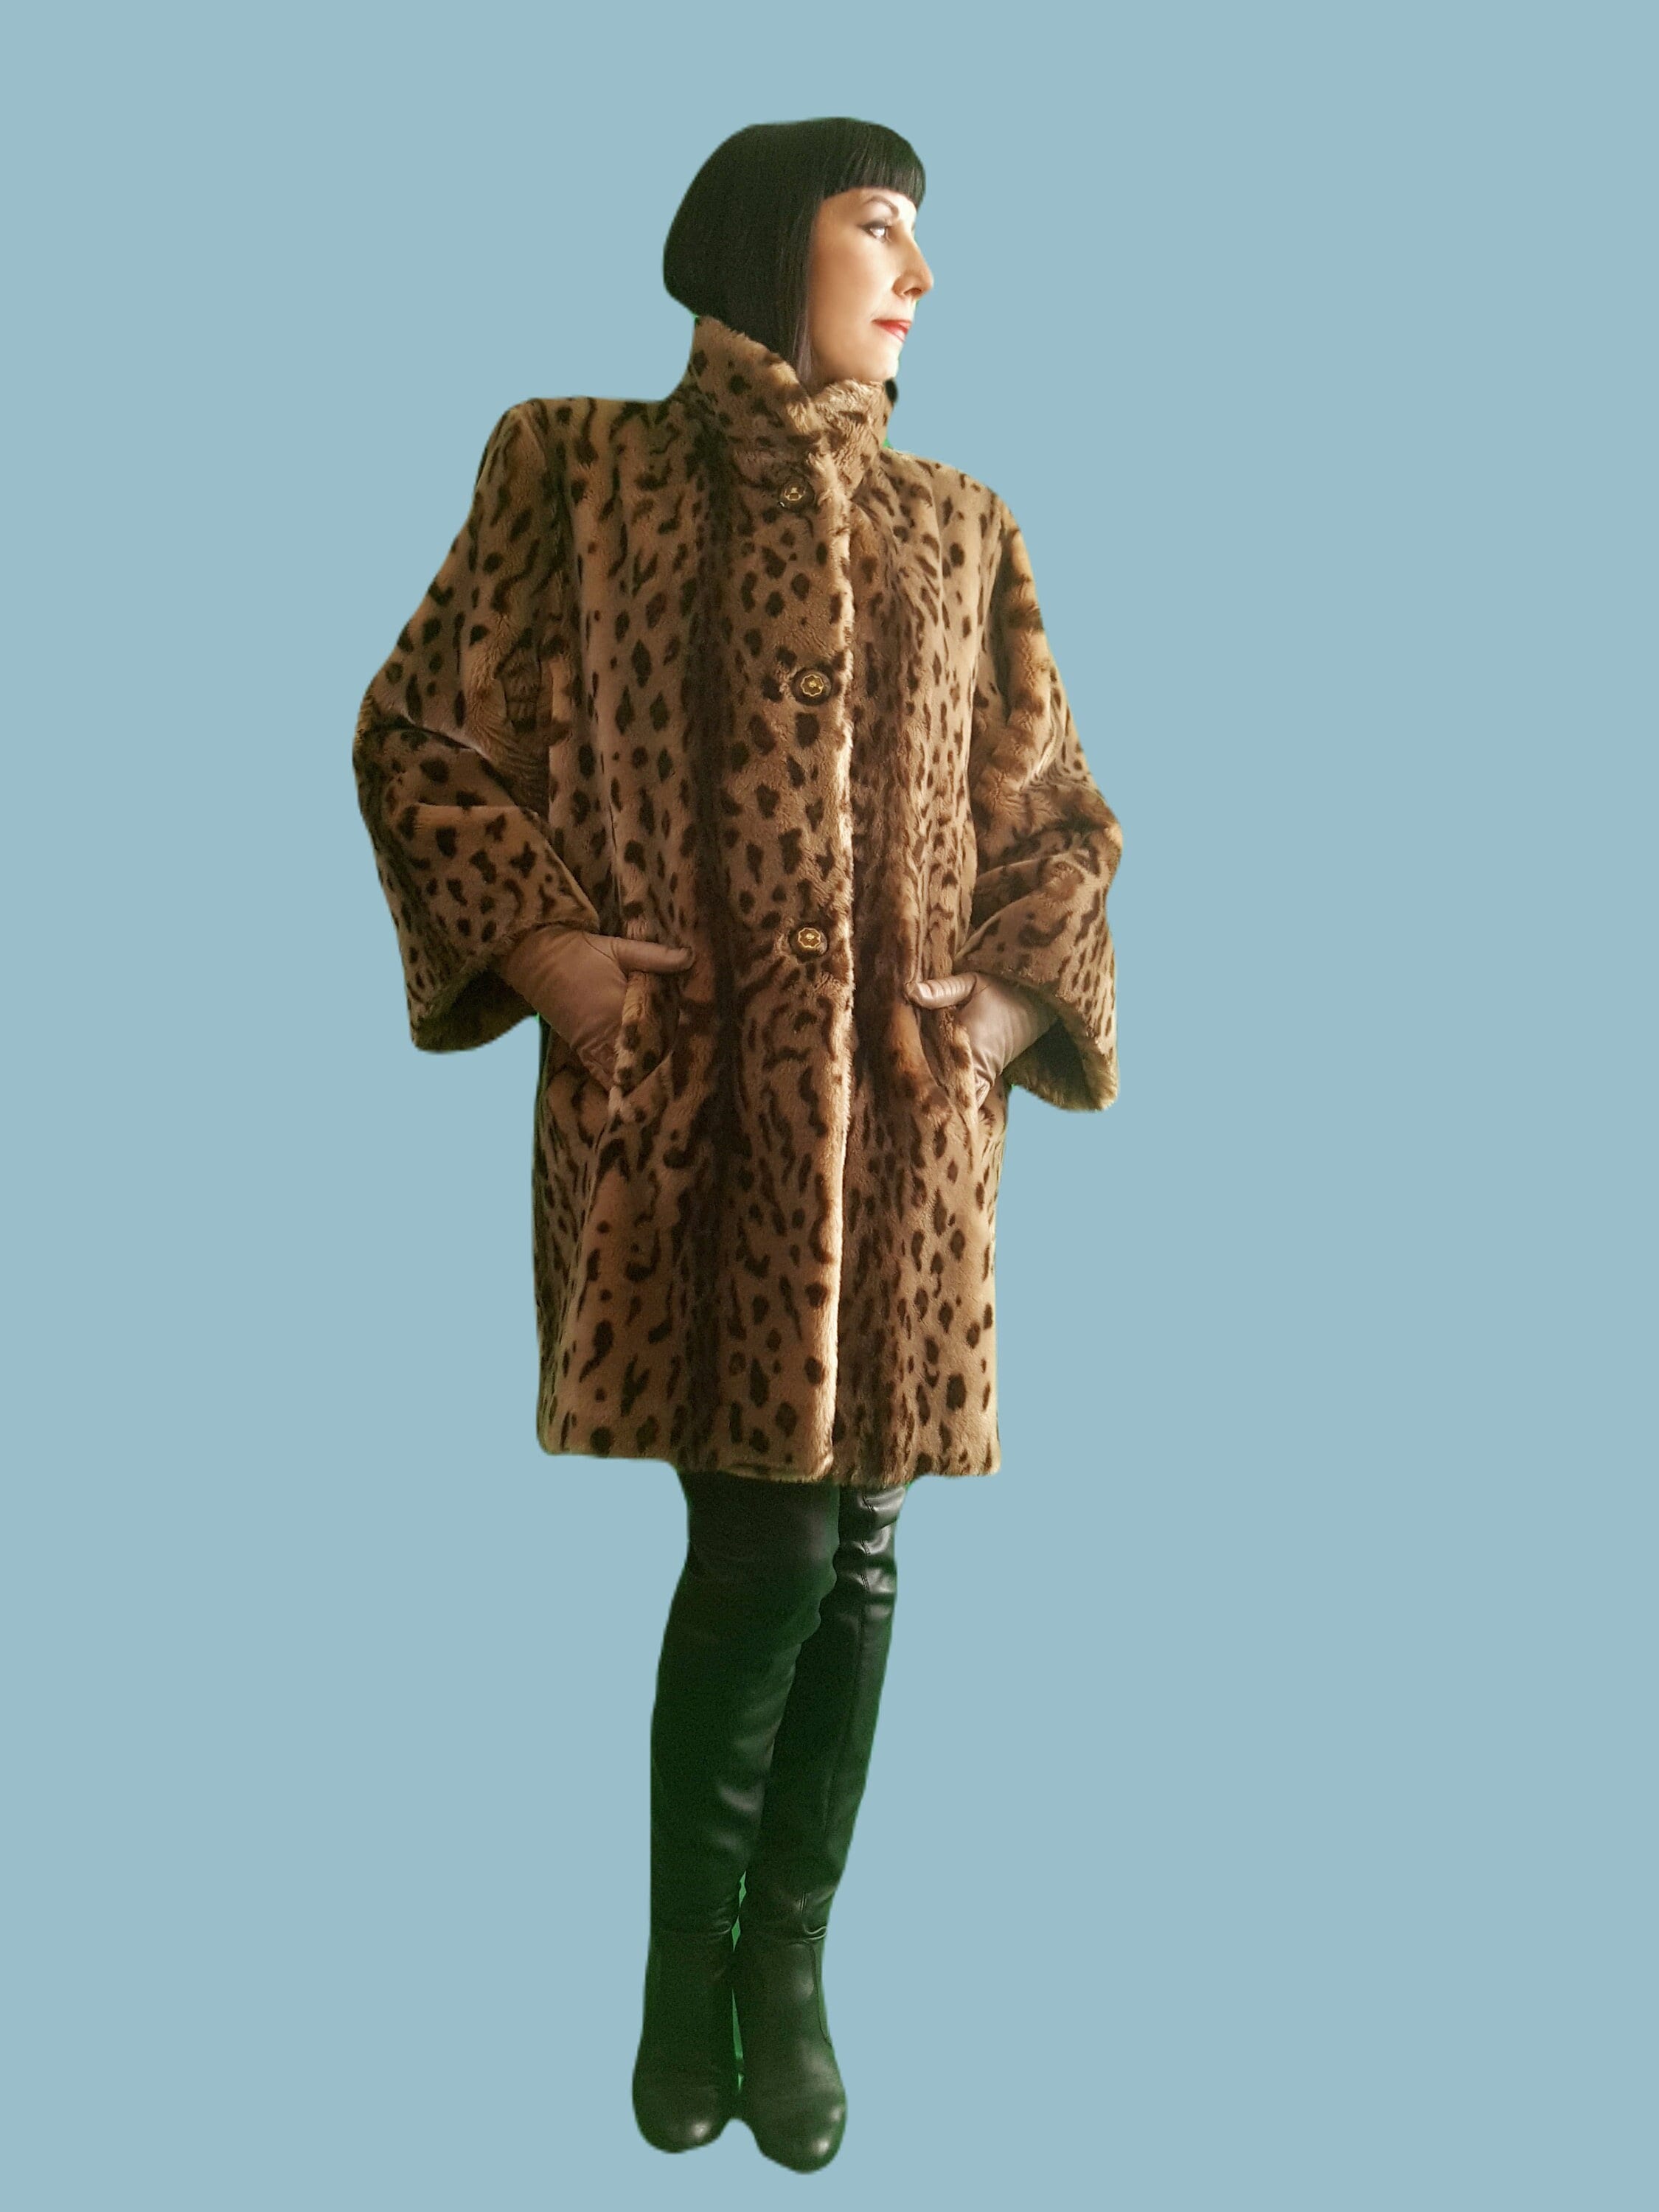 Blue Leopard Print Faux Fur Jacket Panther Embroidery – Jukebox Fashion